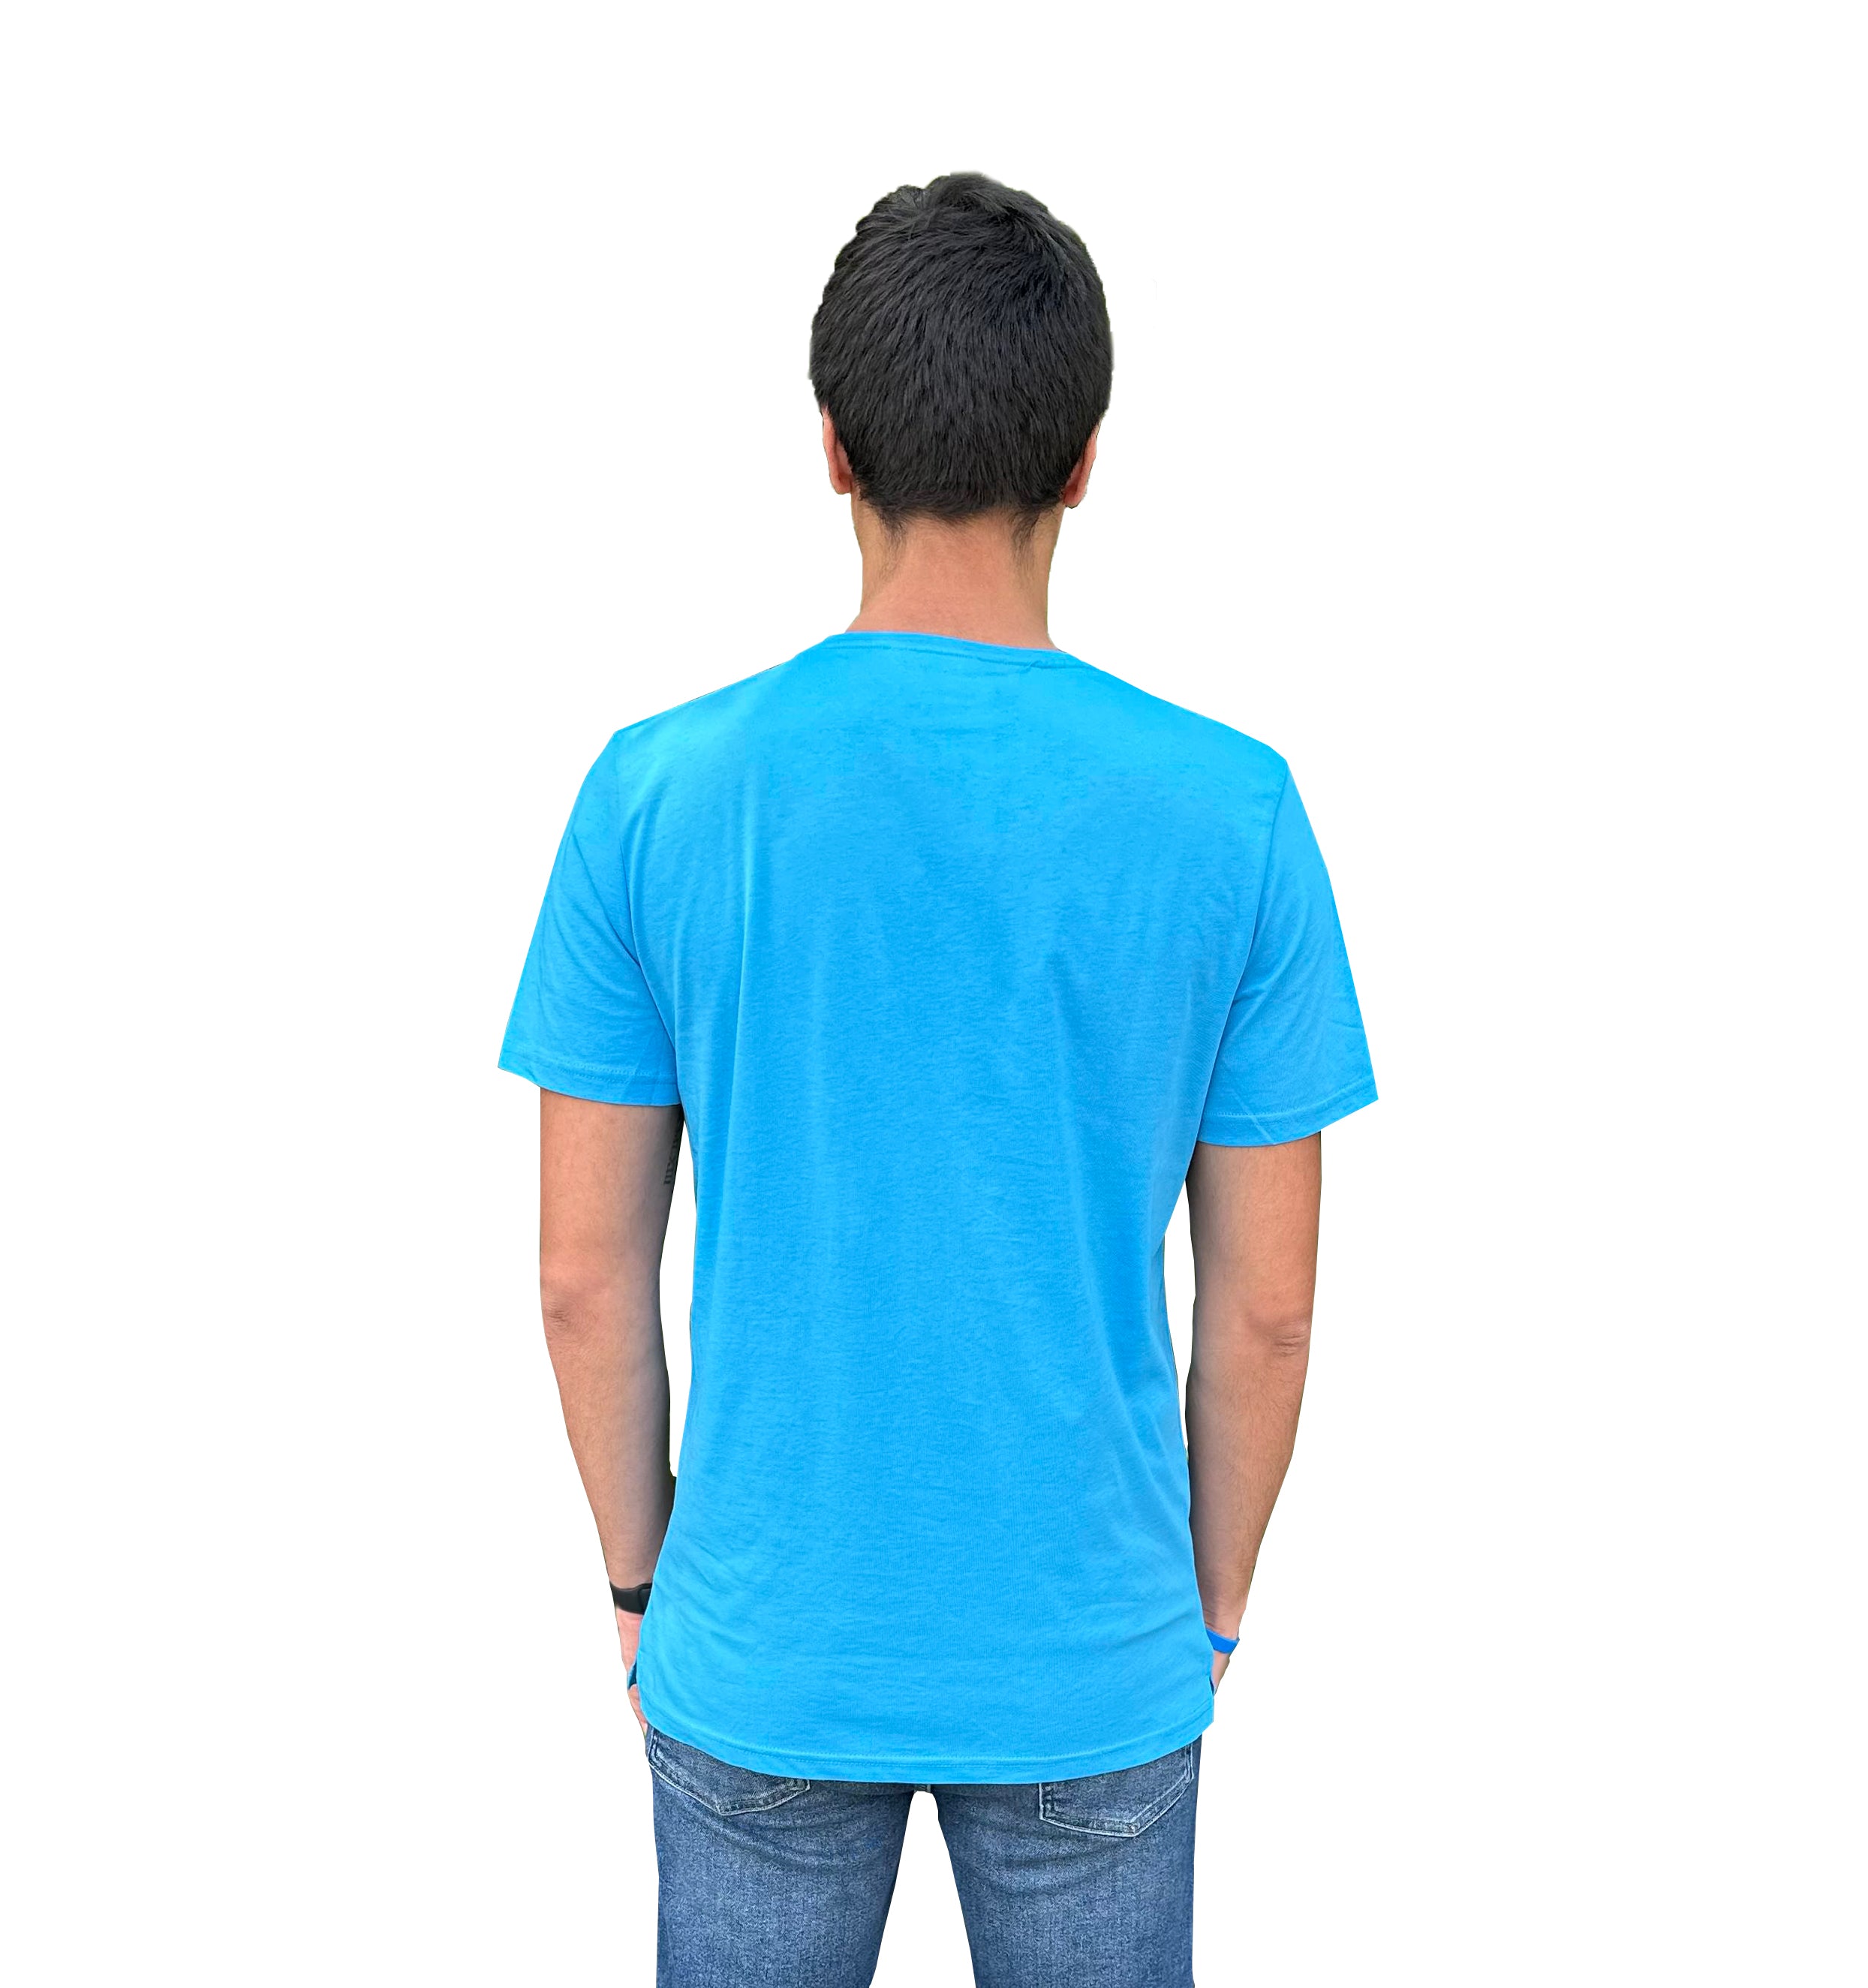 Men's Short Sleeve Crewneck T-Shirt in 100% Cotton - Wear Sierra